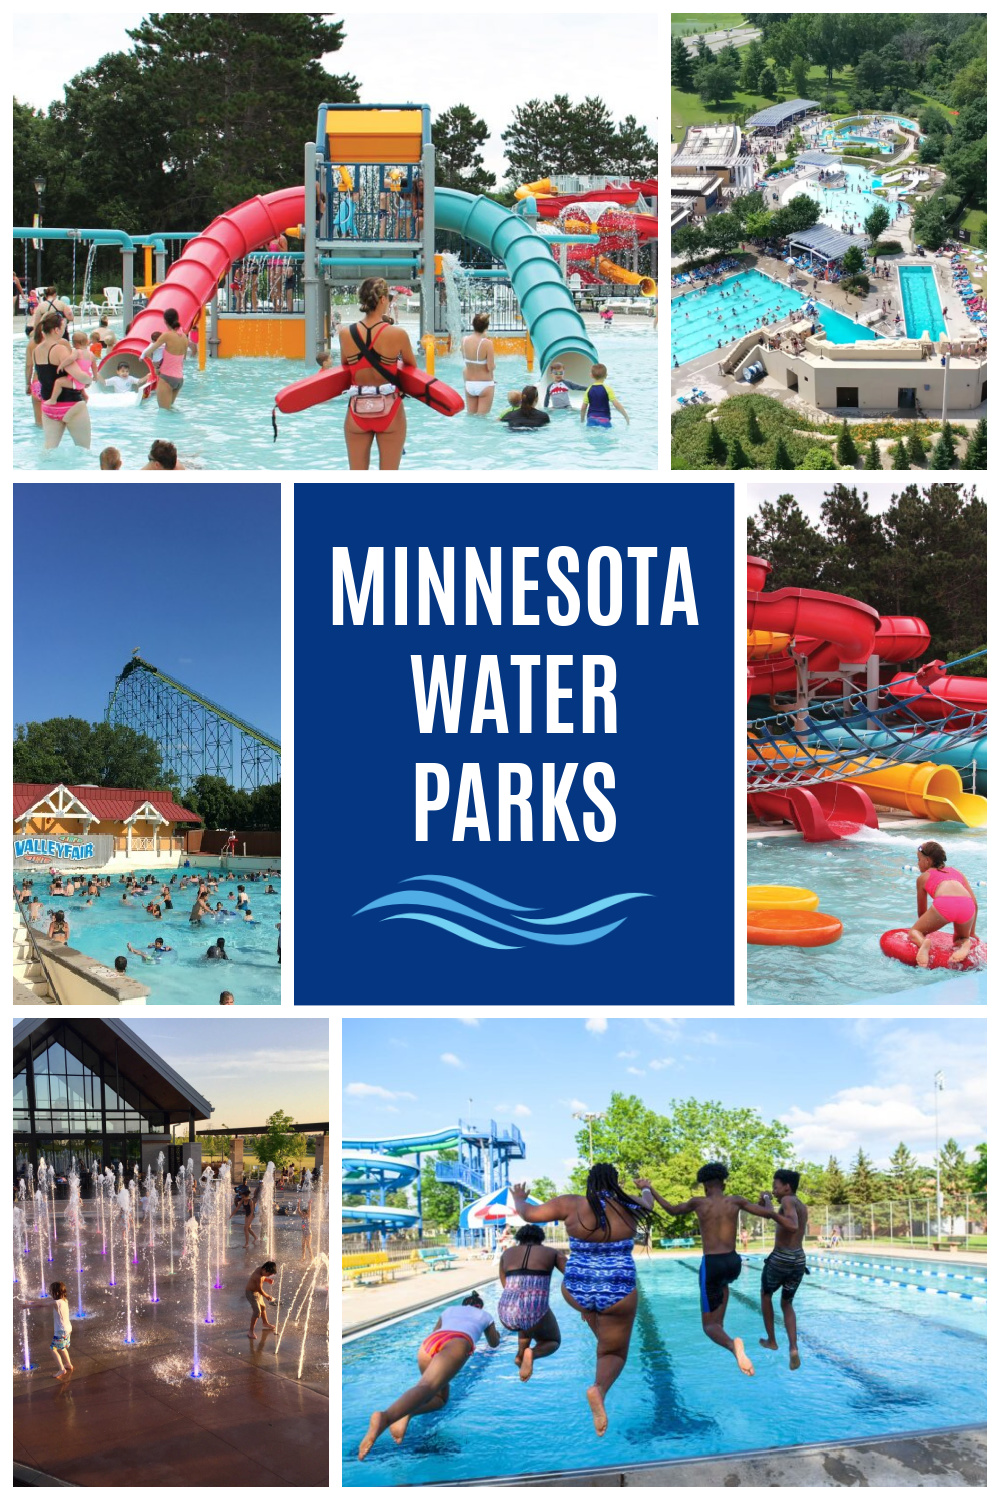 Minnesota Water Parks